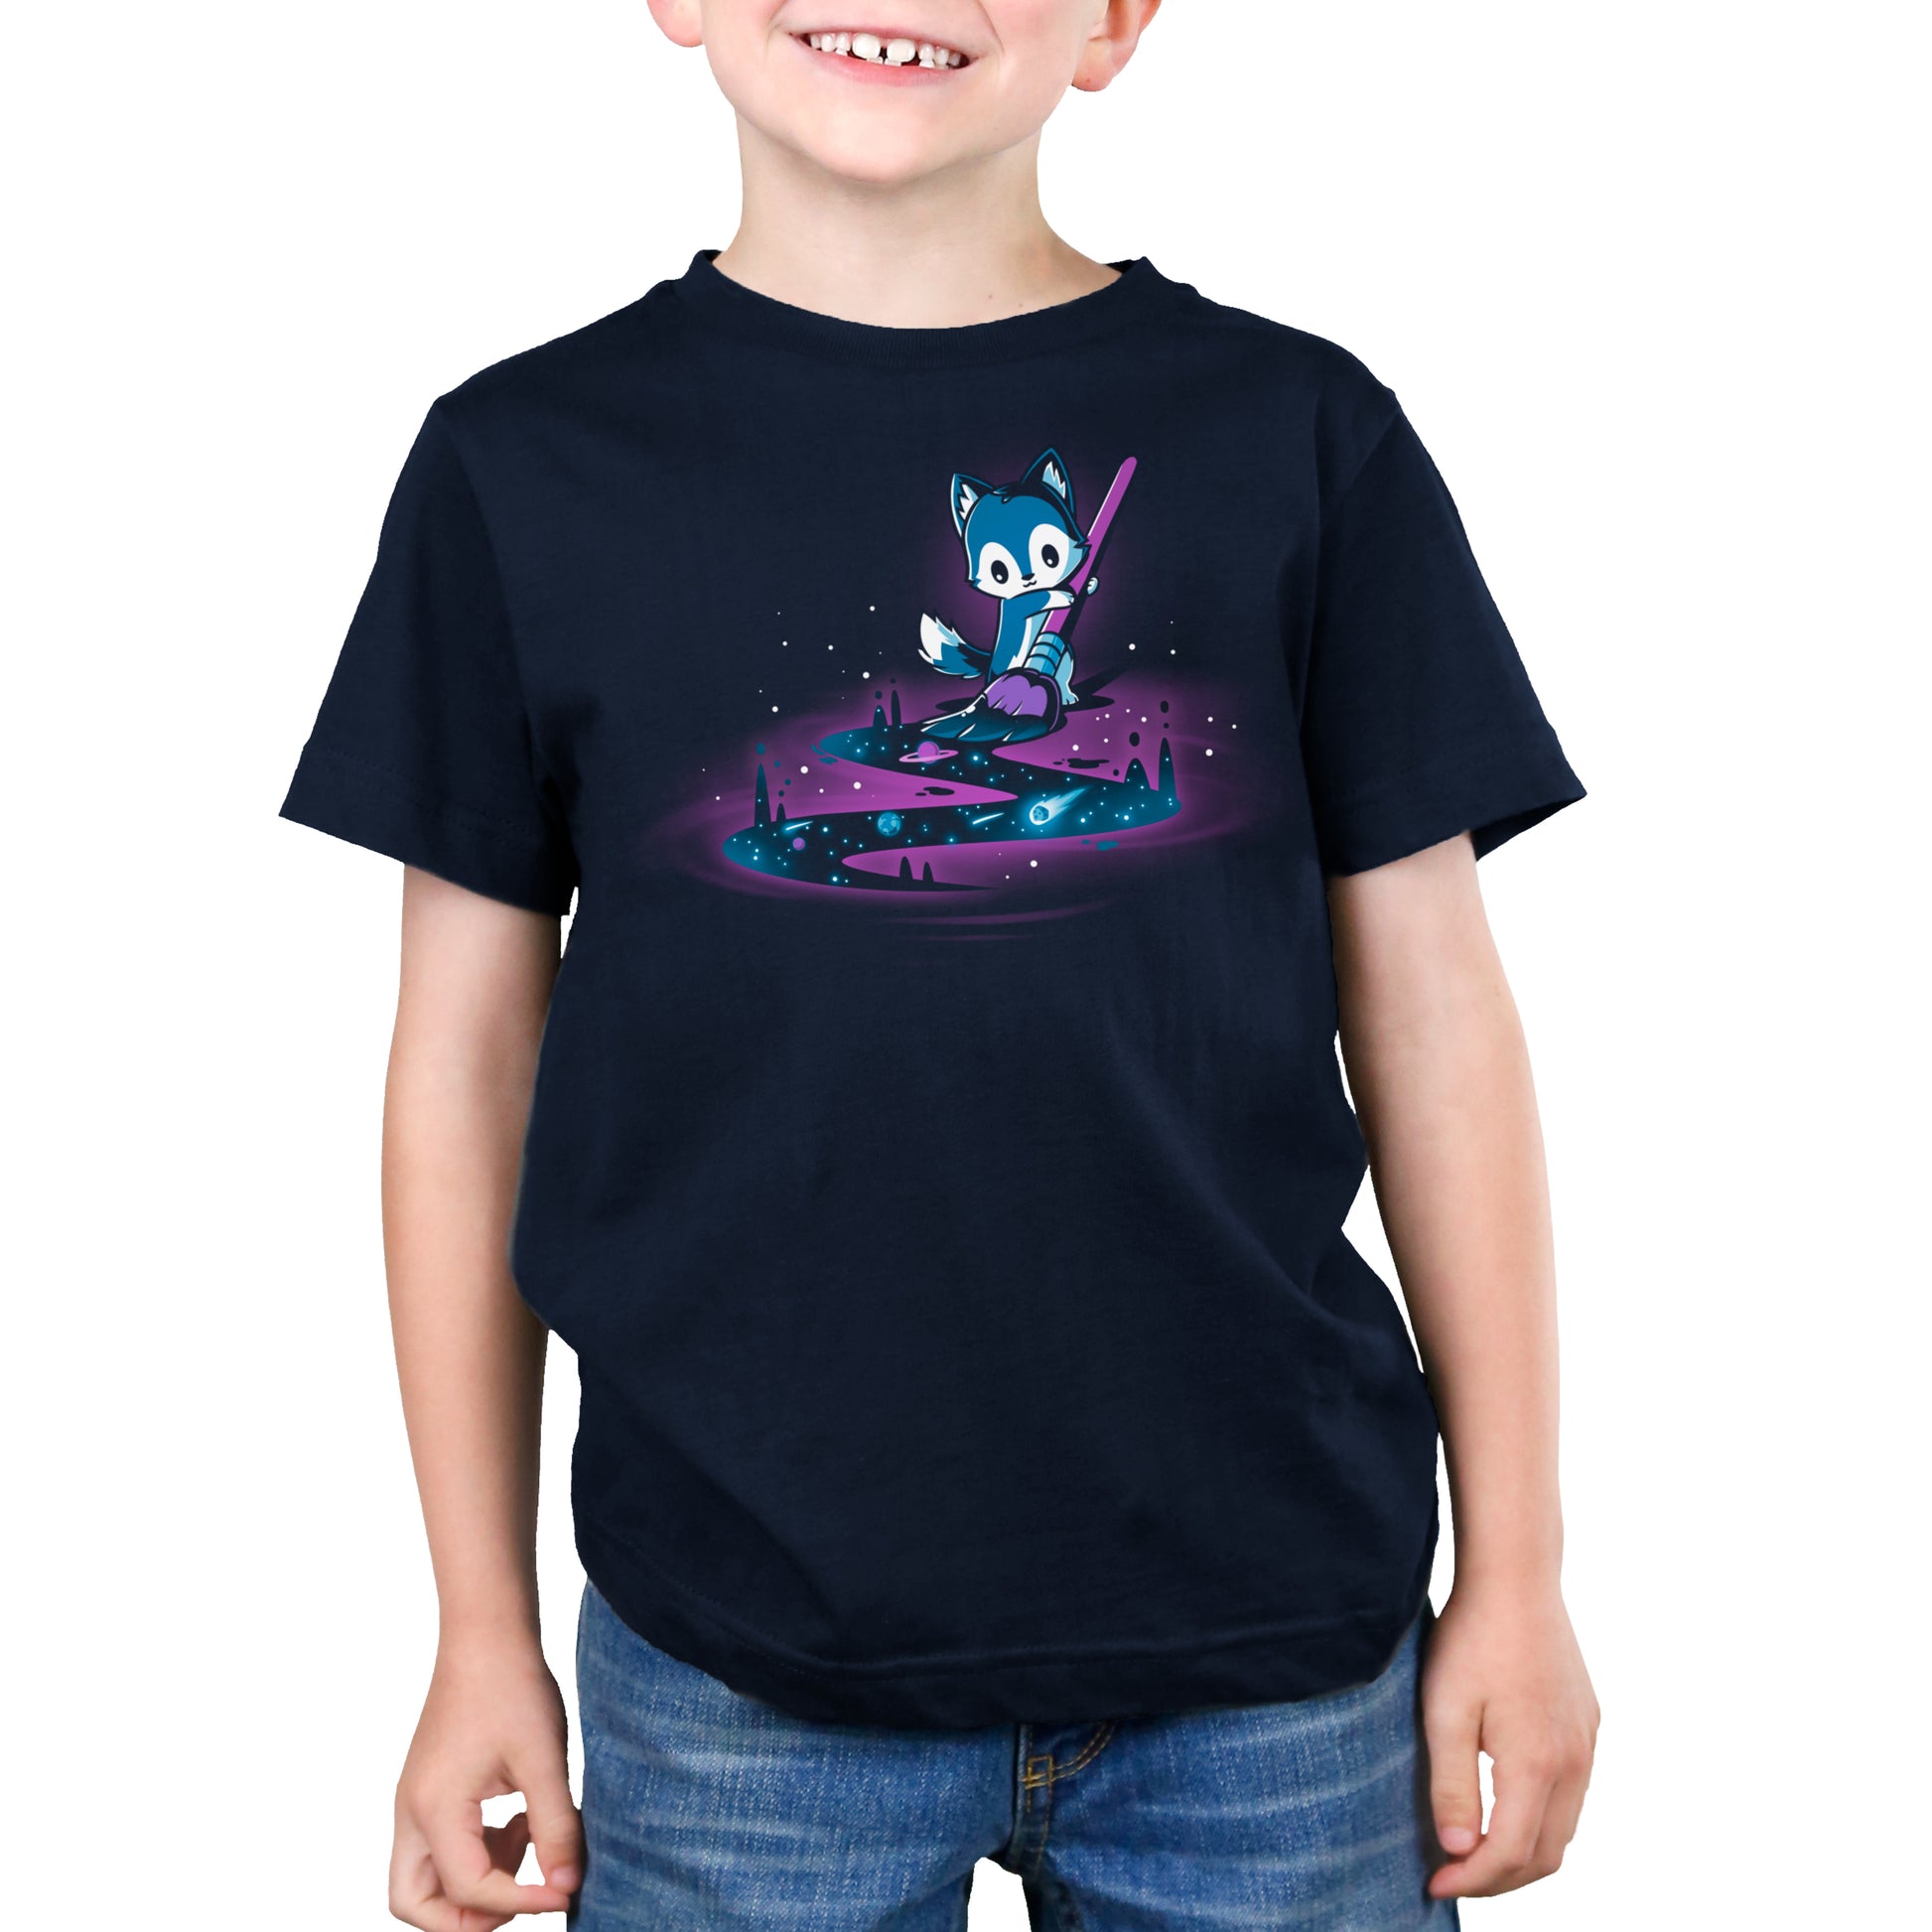 A young boy wearing a TeeTurtle Galactic Painter t-shirt.